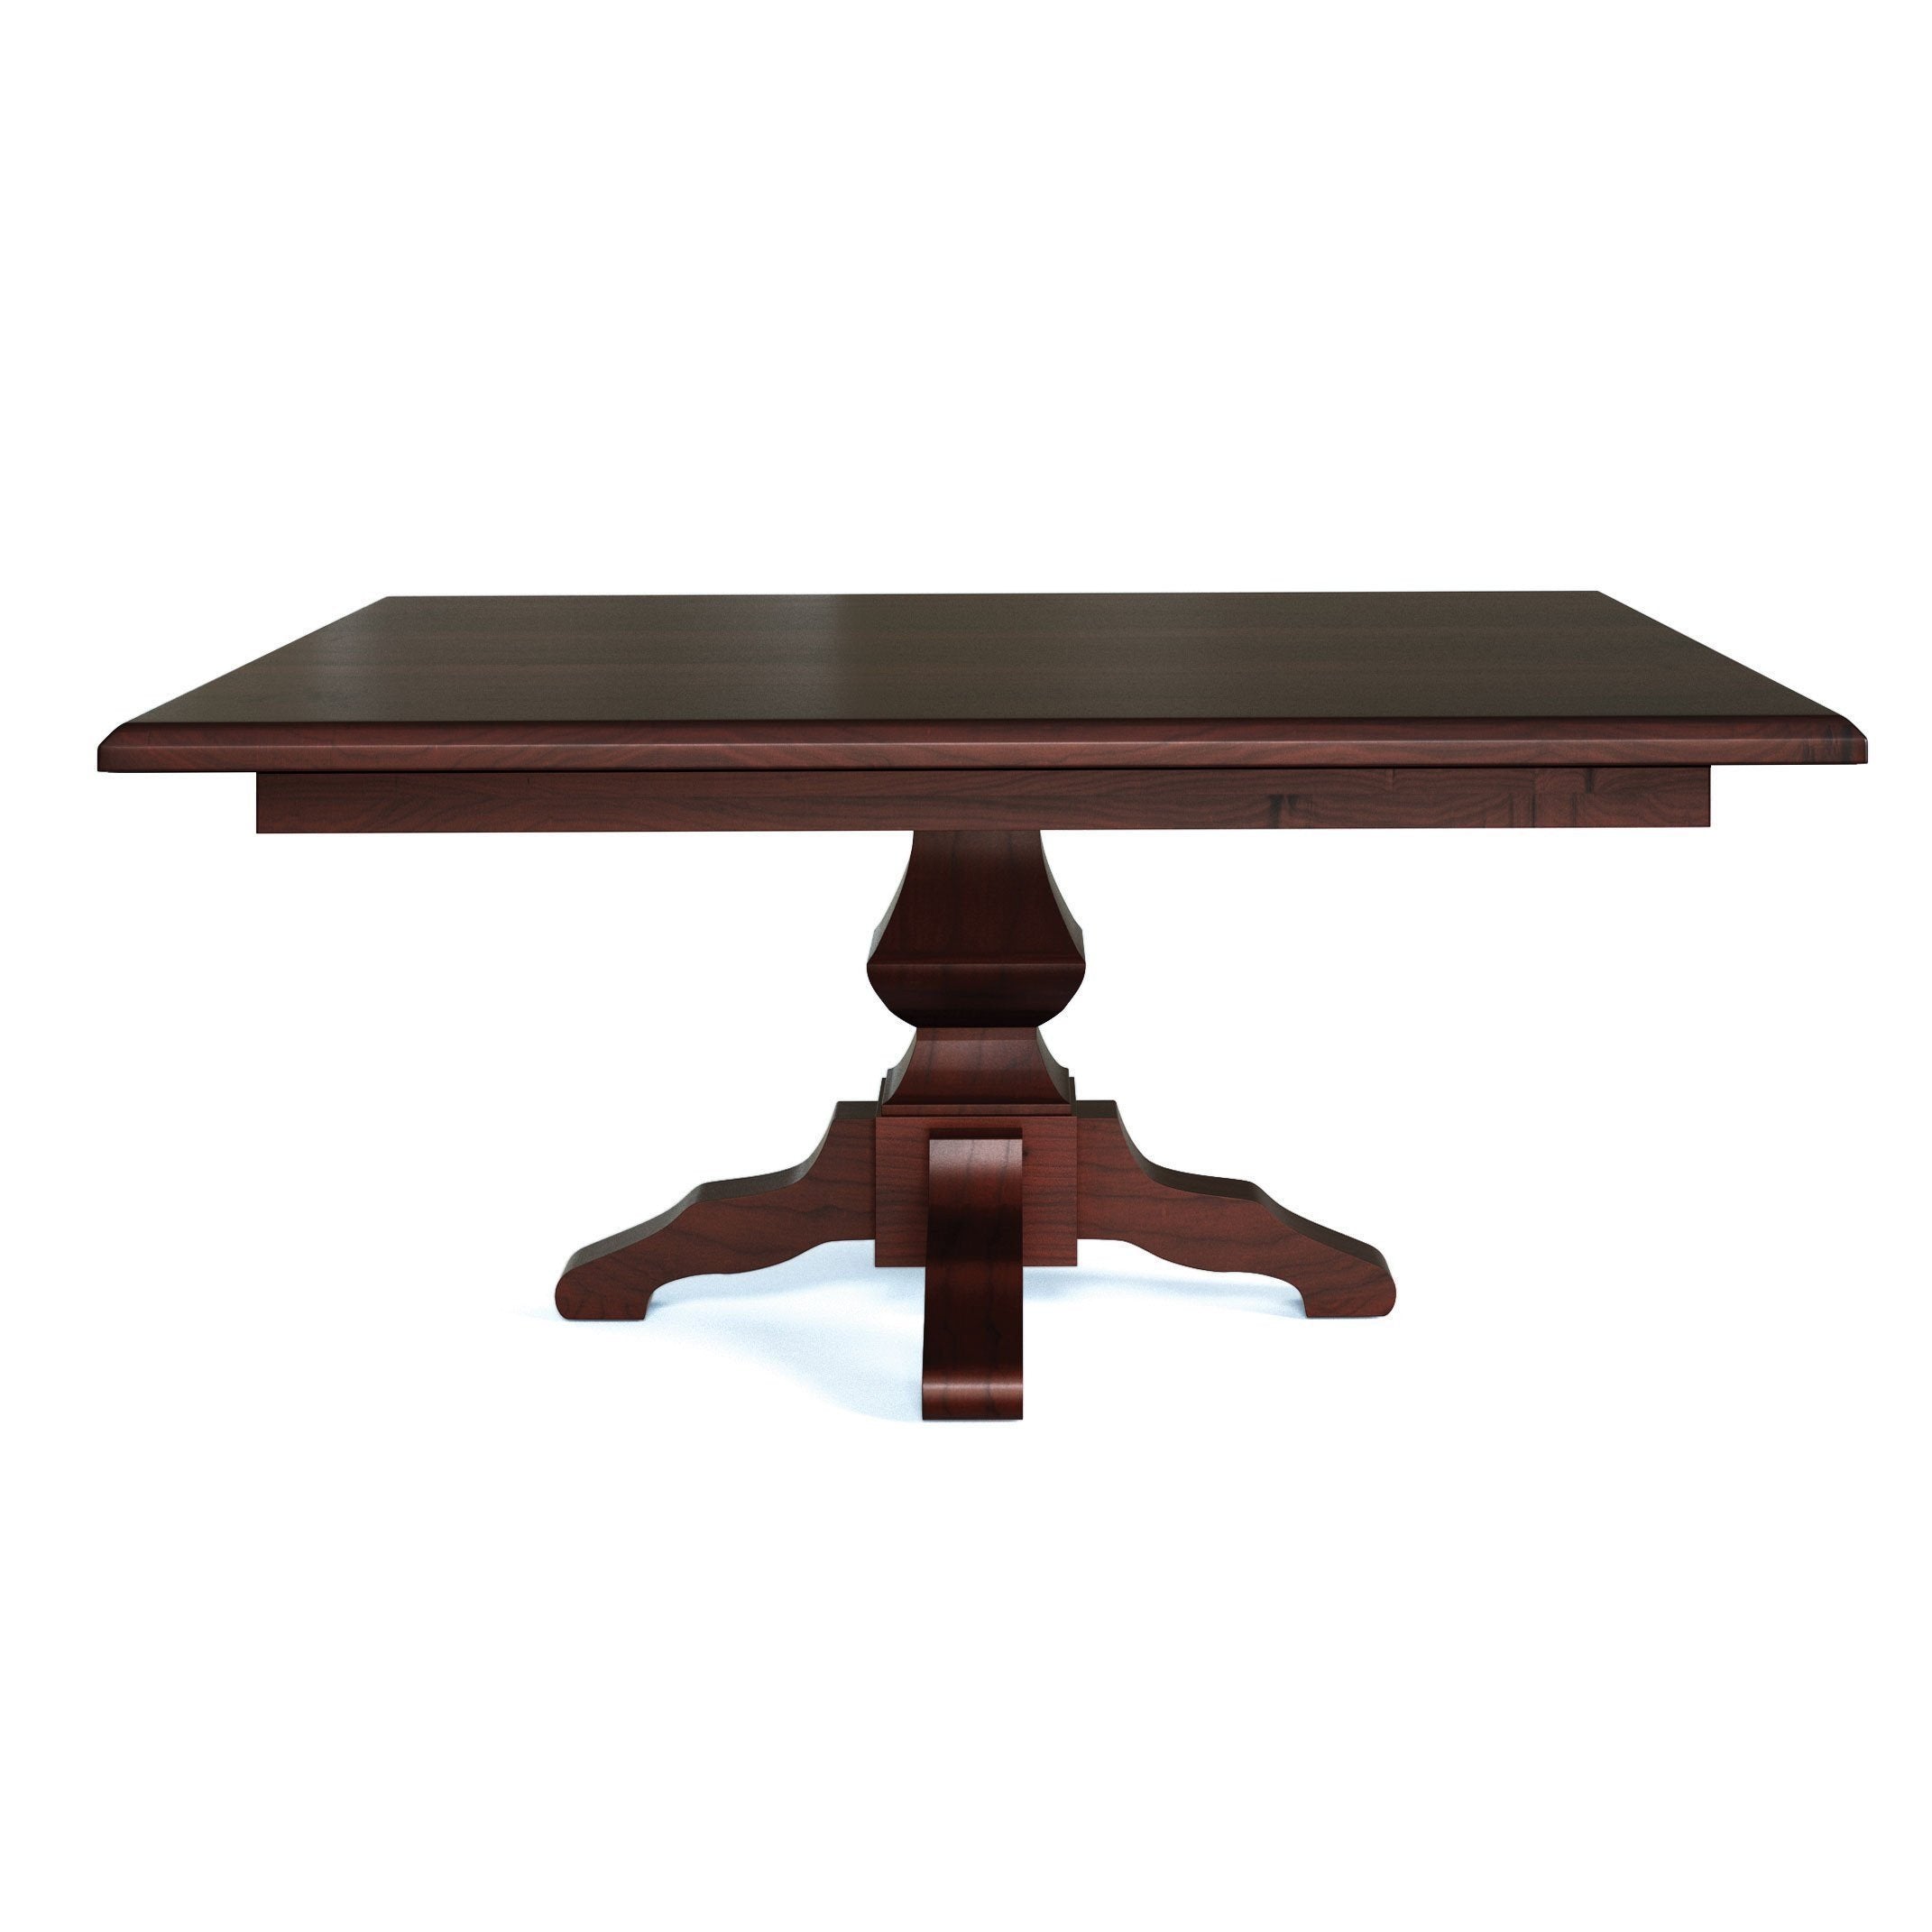 dining-table-kingston-single-pedestal-120031.jpg